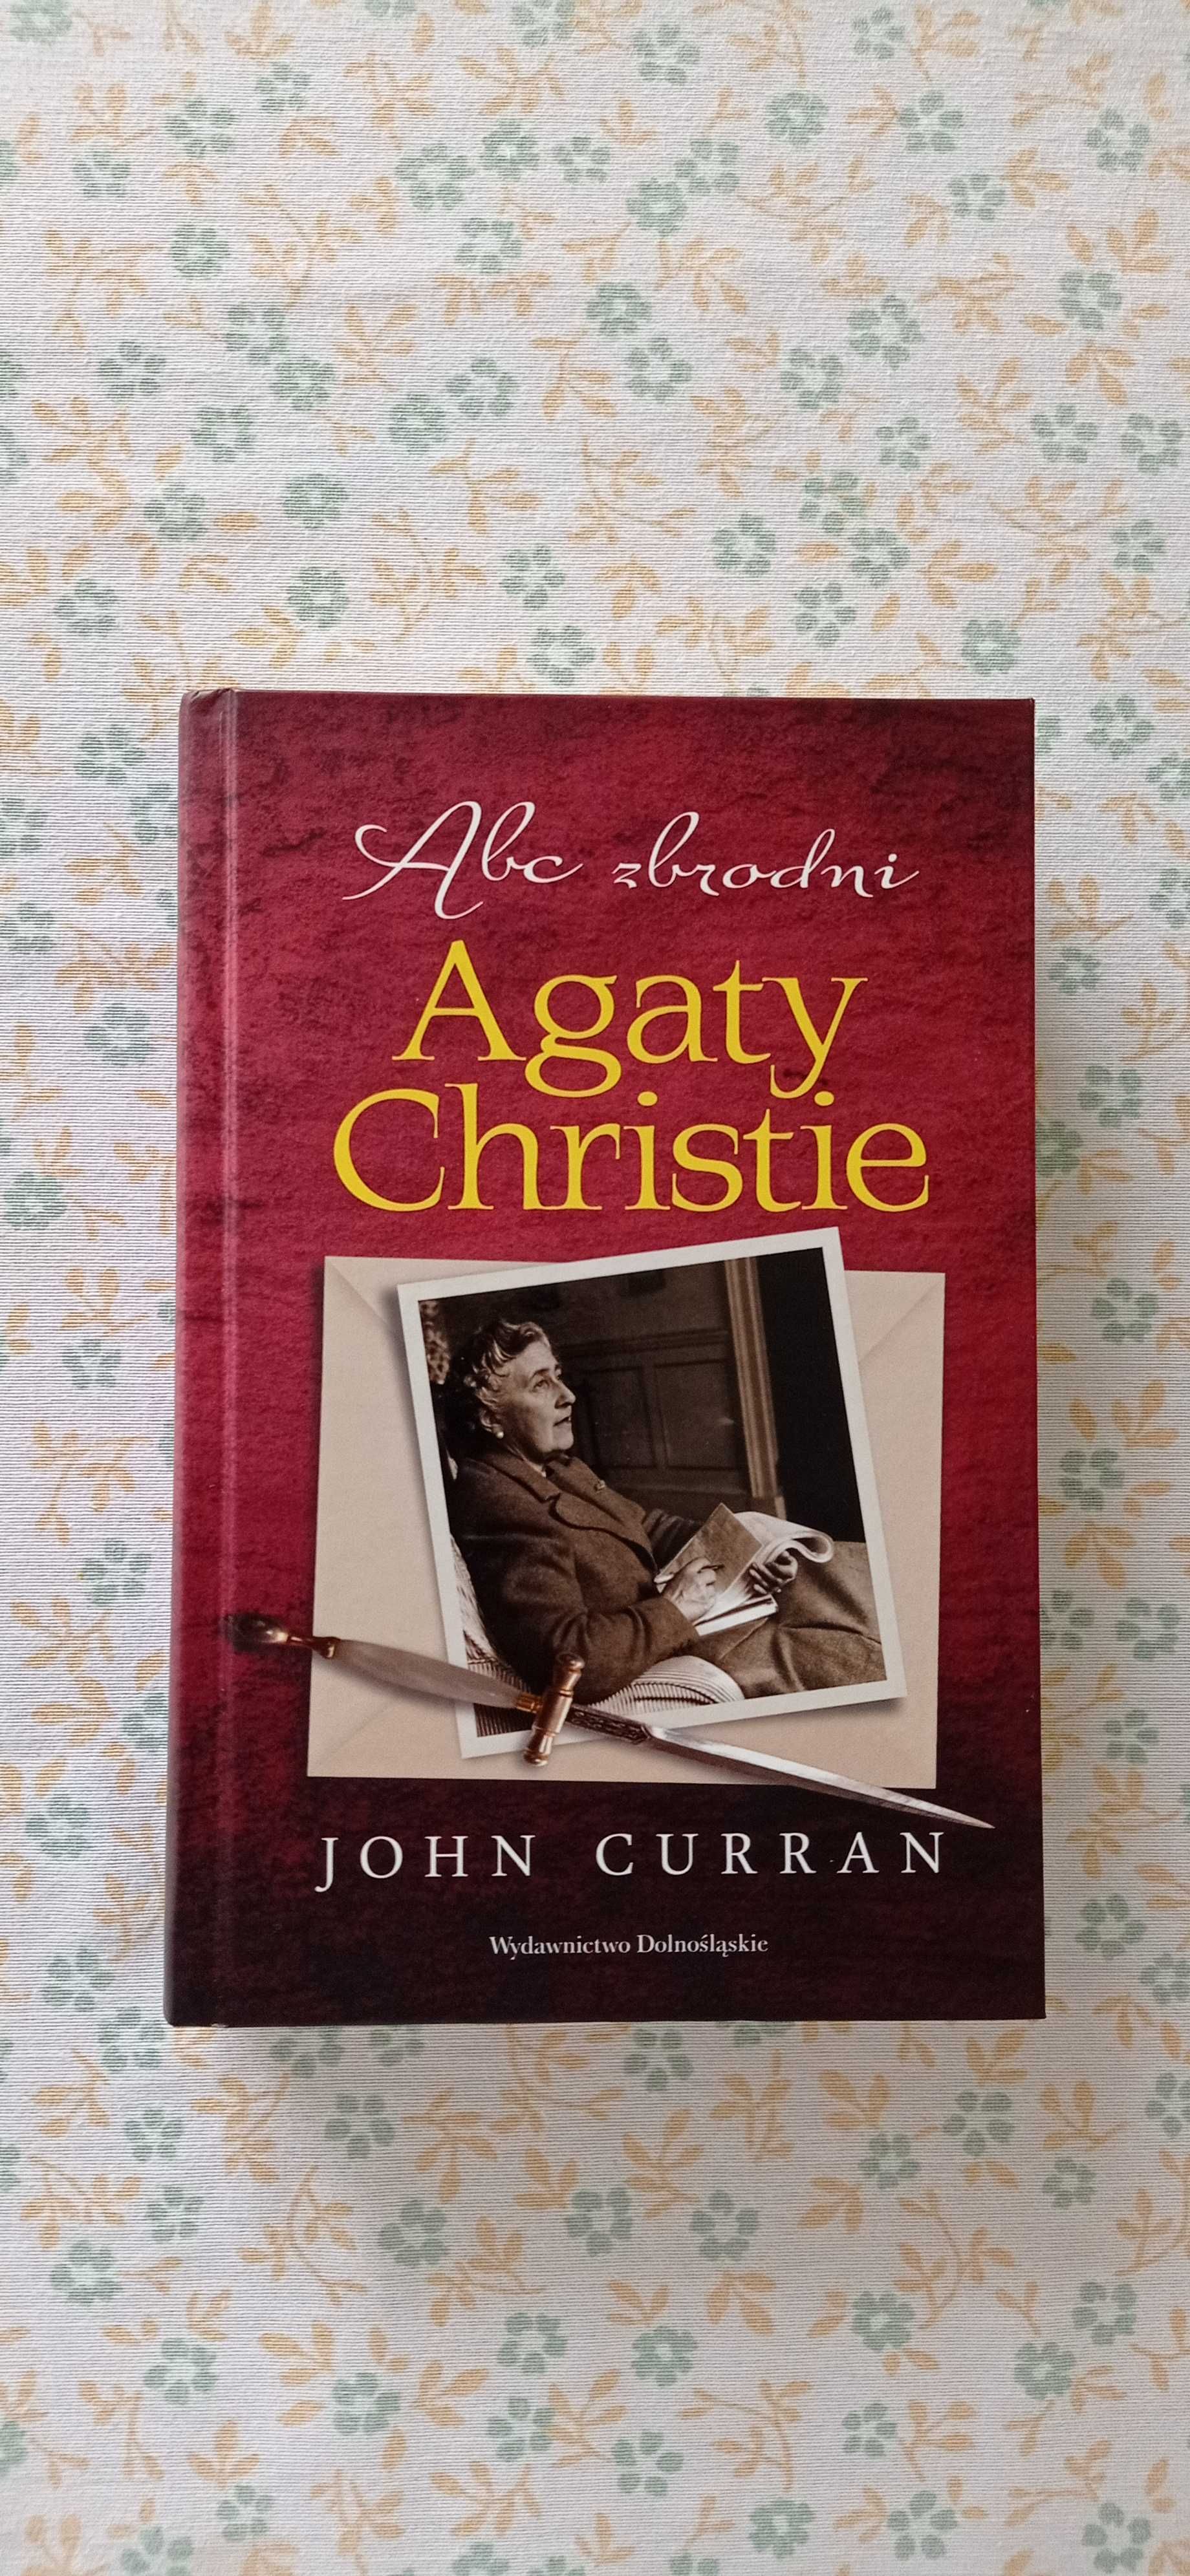 Abc zbrodni Agaty Christie John Curran